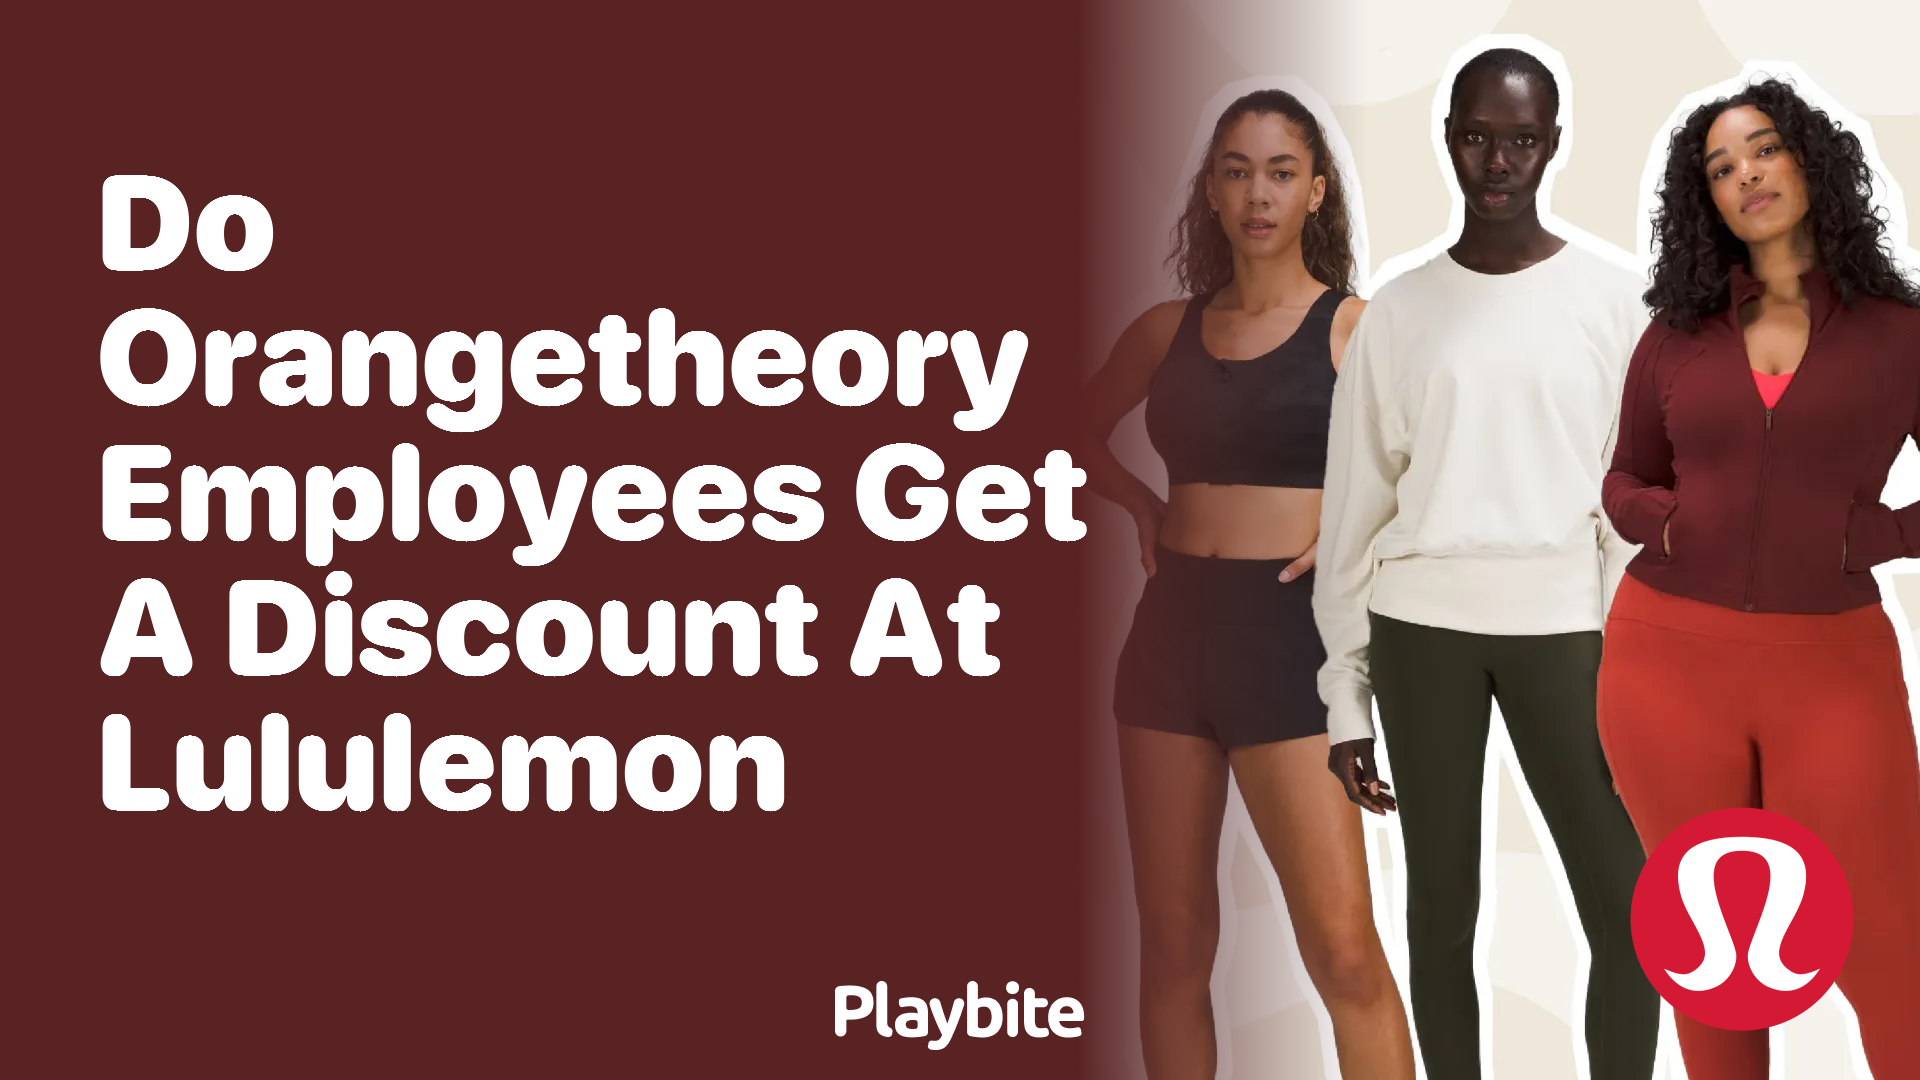 Do Orangetheory Employees Get a Discount at Lululemon? - Playbite